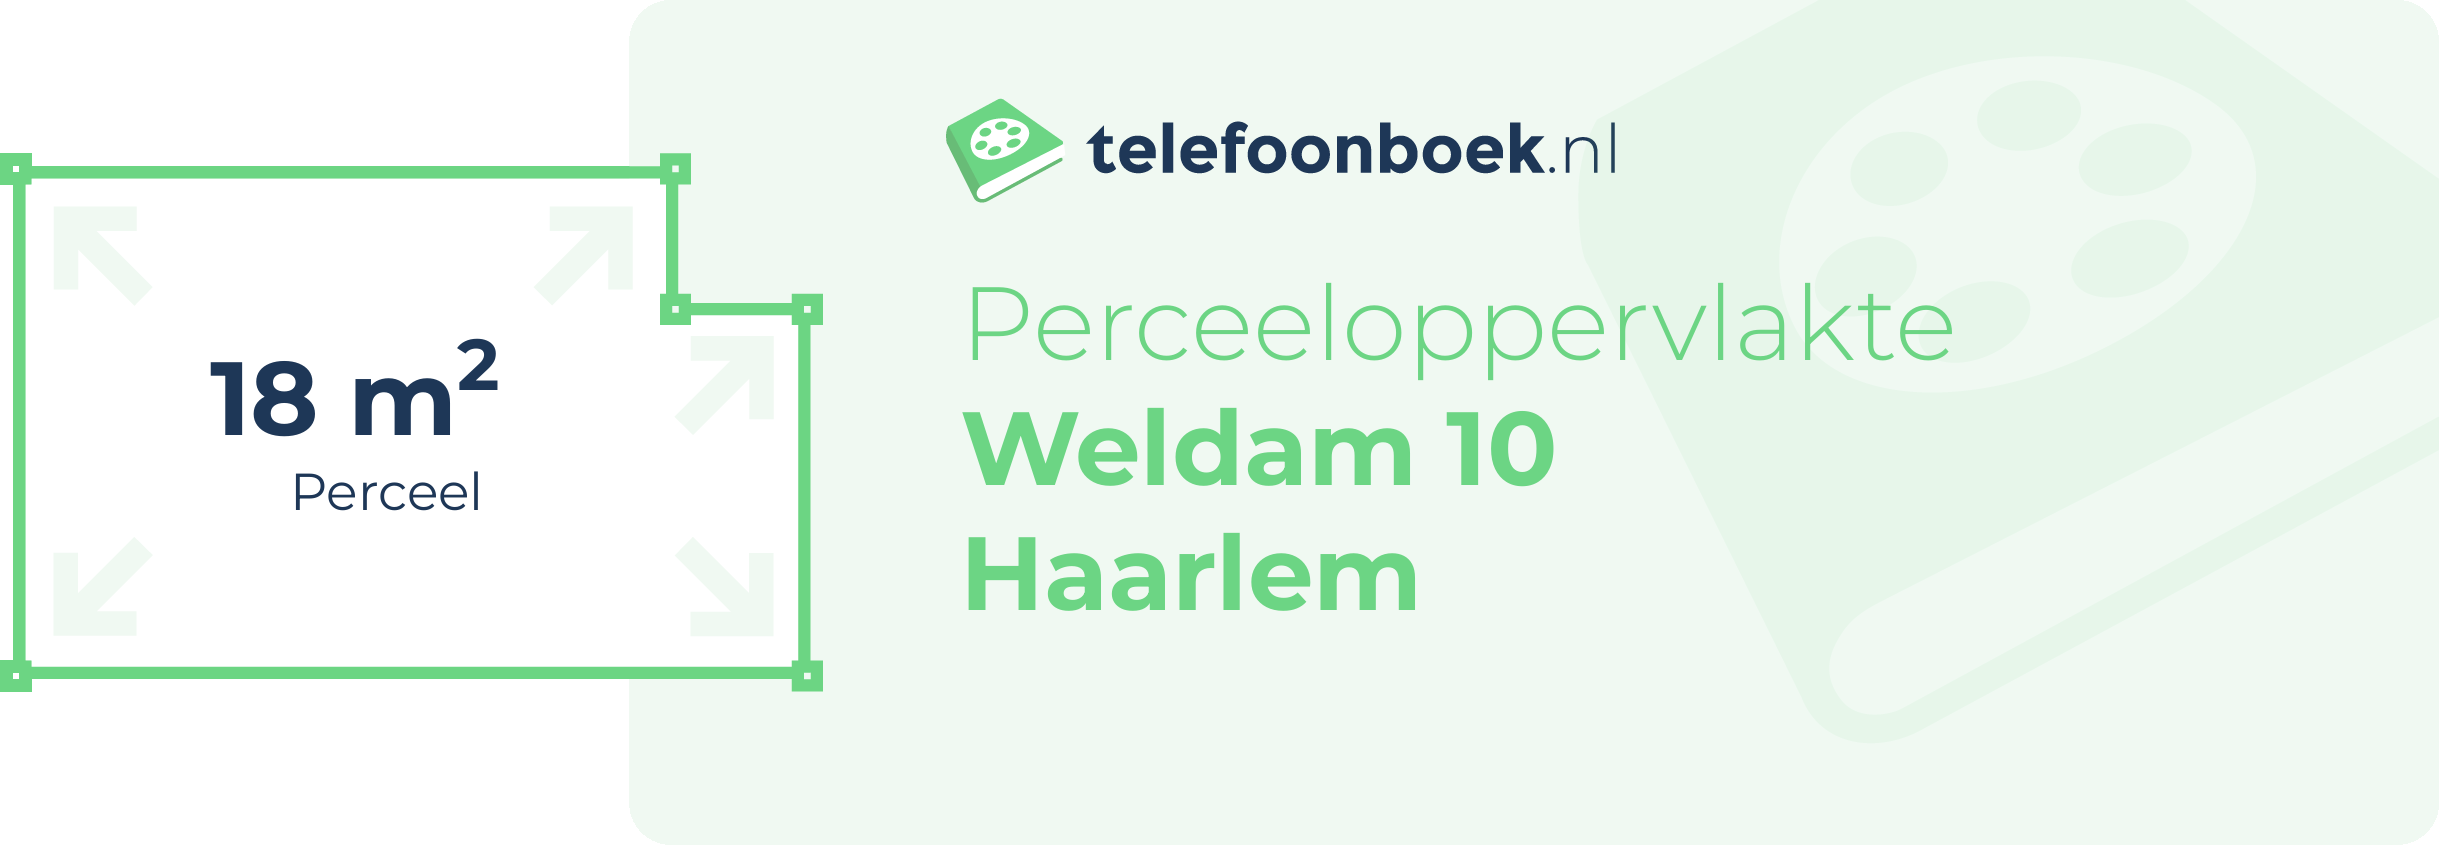 Perceeloppervlakte Weldam 10 Haarlem